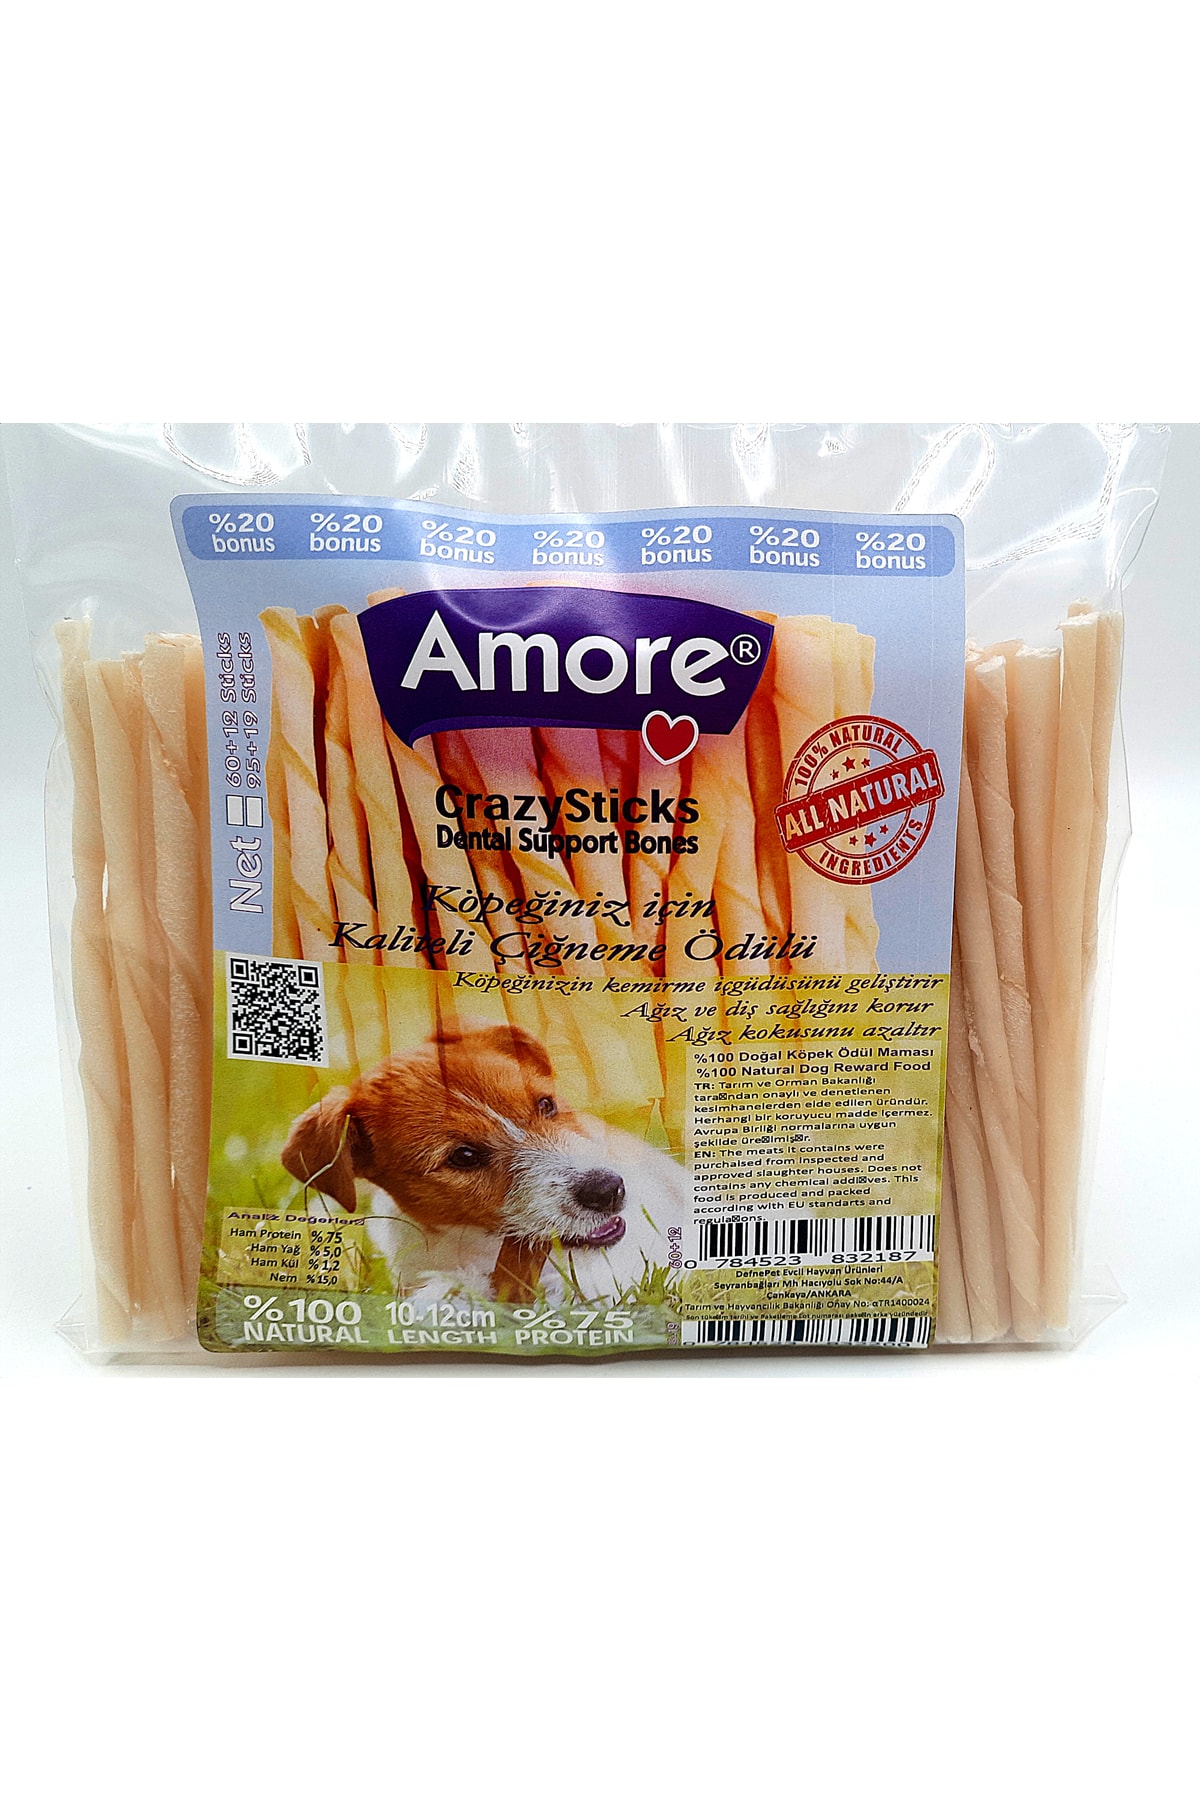 Amore Crazy Dog Sticks Kopek Cigneme Odul Cubuklari Natural 95+19 Adet Bonus Pack